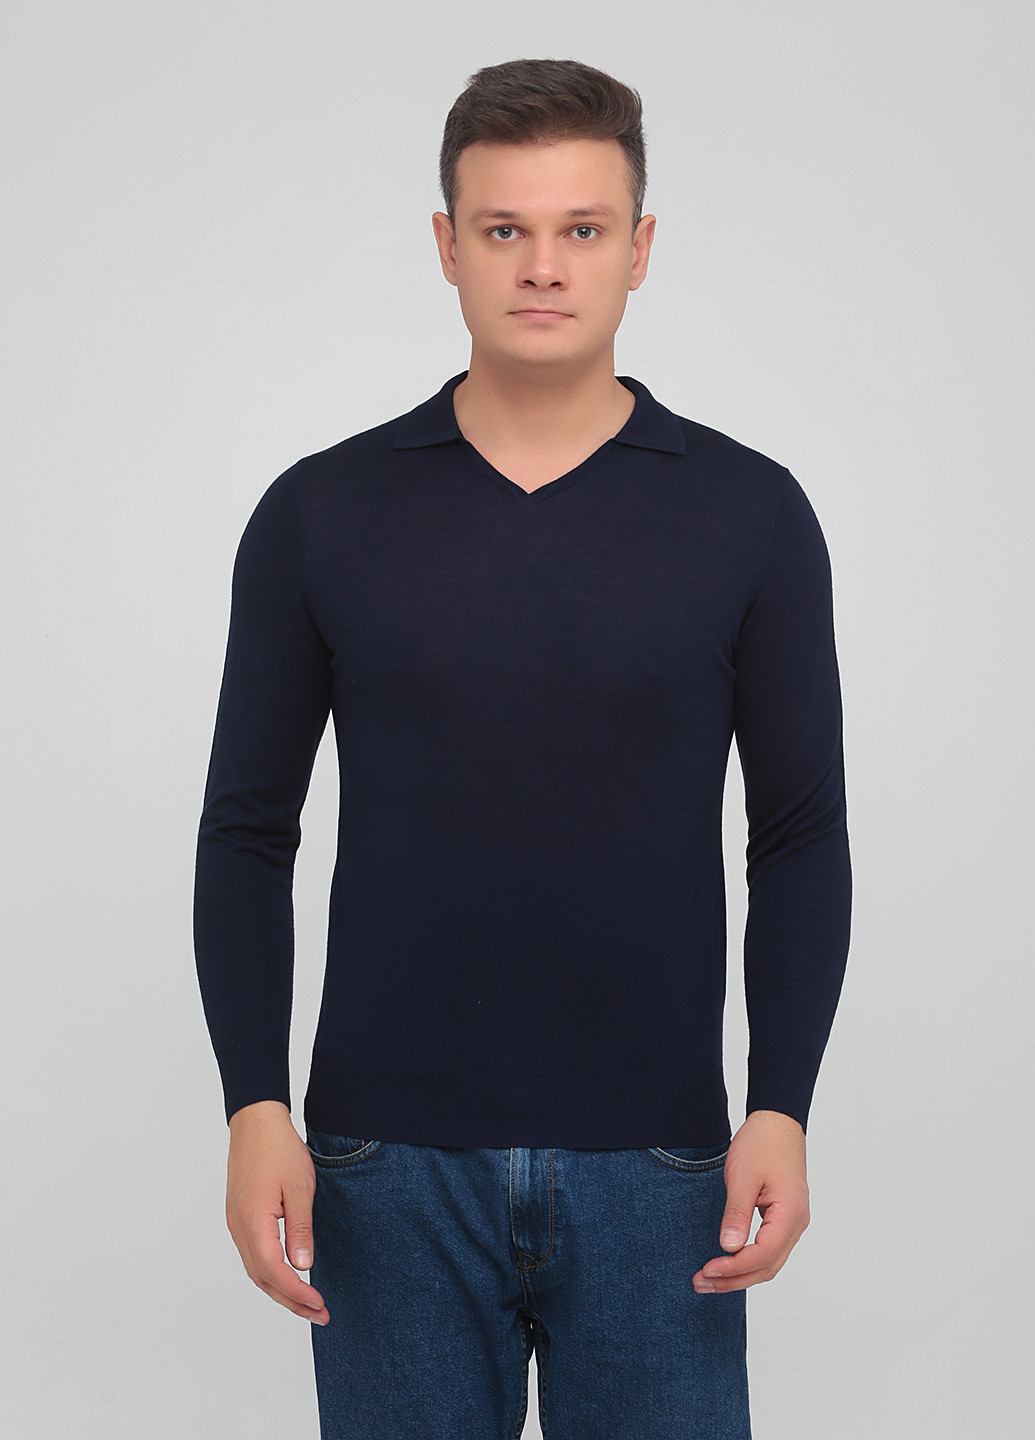 Темно-синий демисезонный пуловер пуловер Pierre Balmain